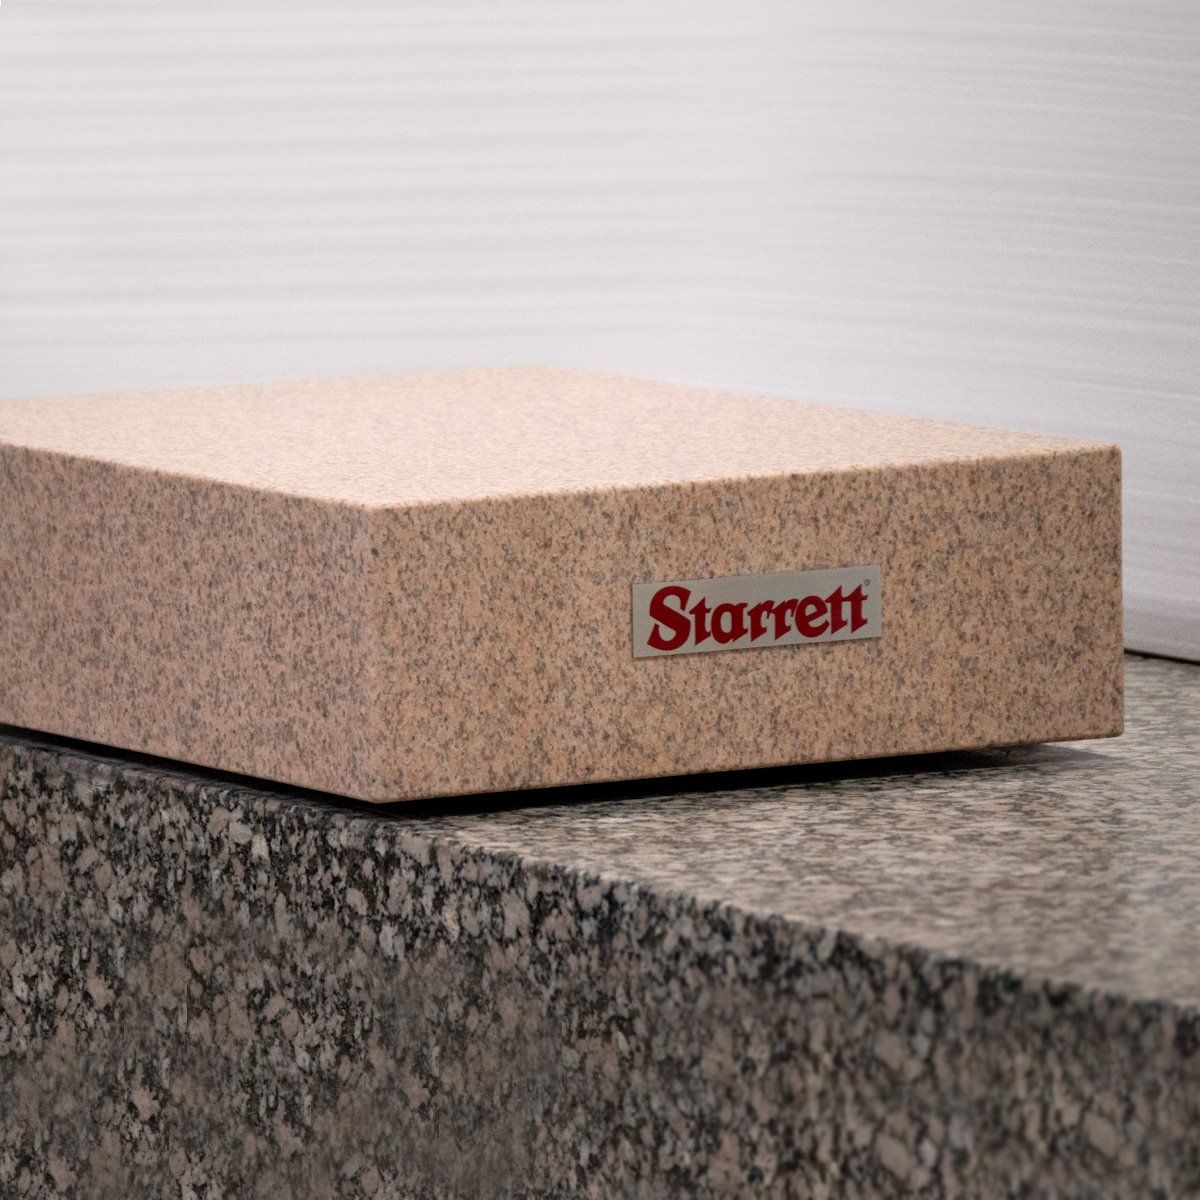 Pink granite surface plate with Starrett logo